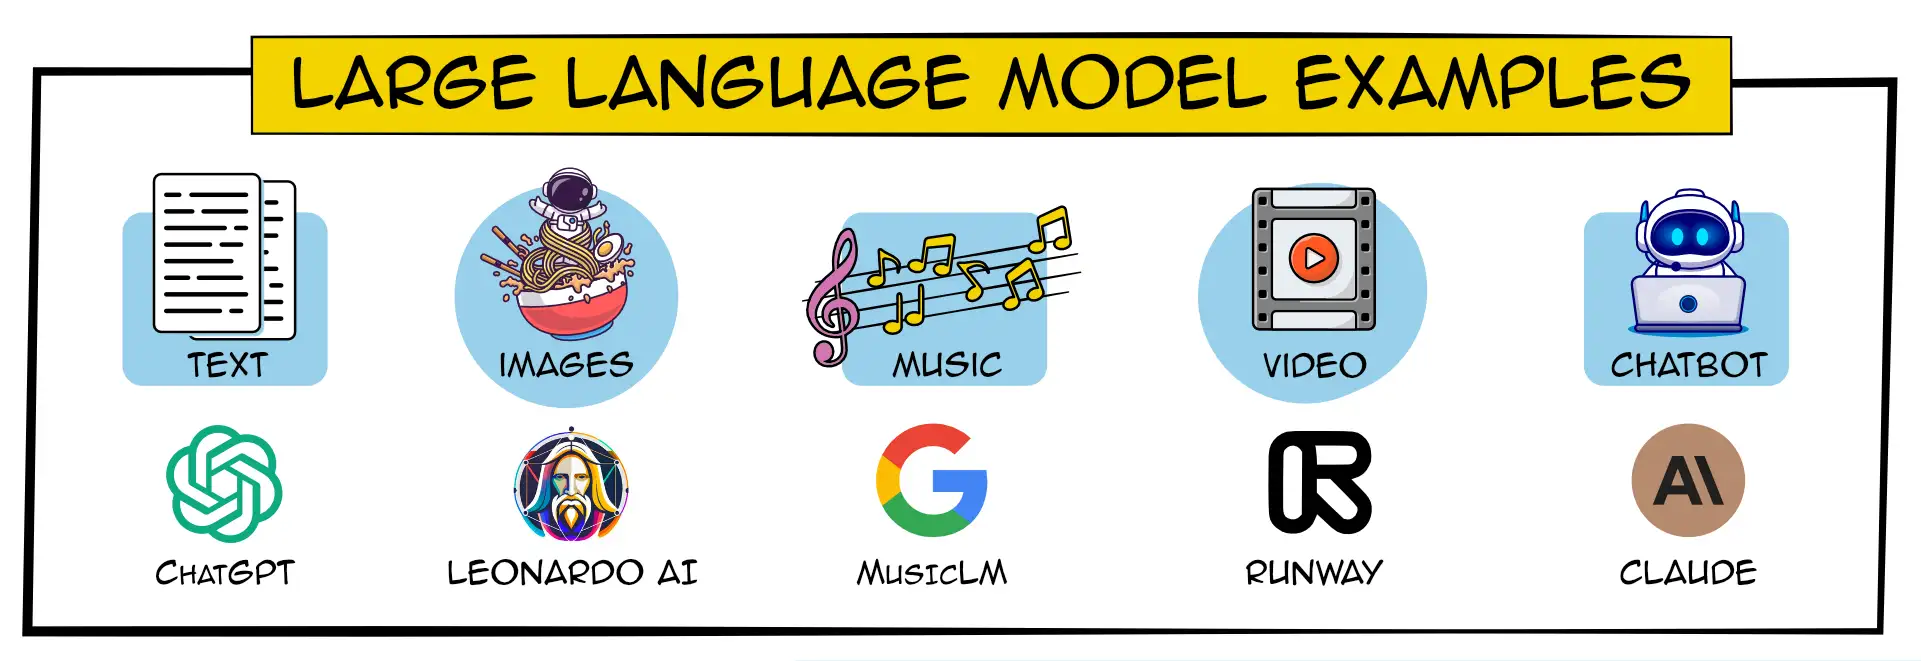 Large Language Model examples